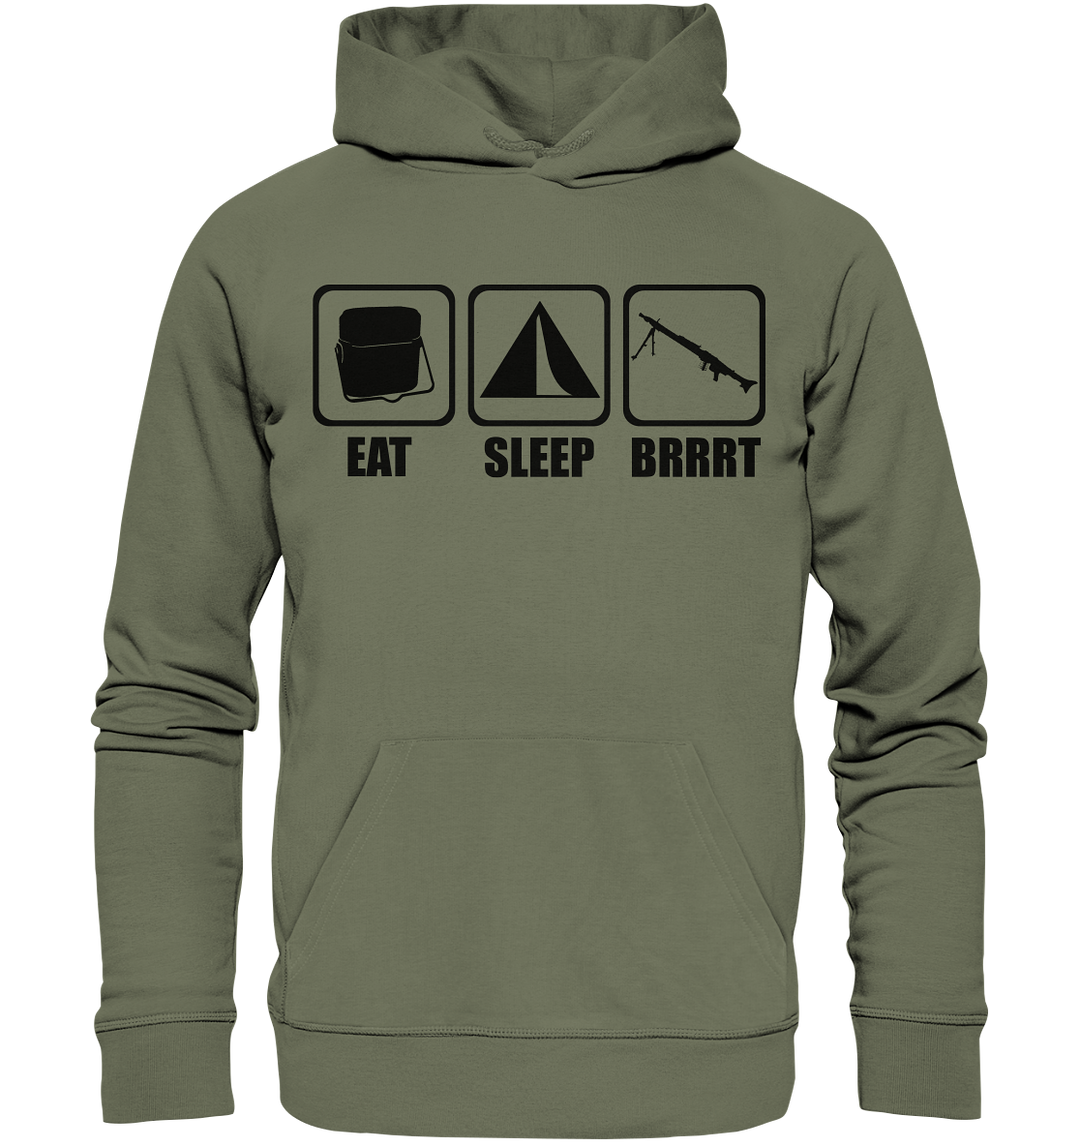 Eat. Sleep. BRRRT. - Premium Unisex Hoodie